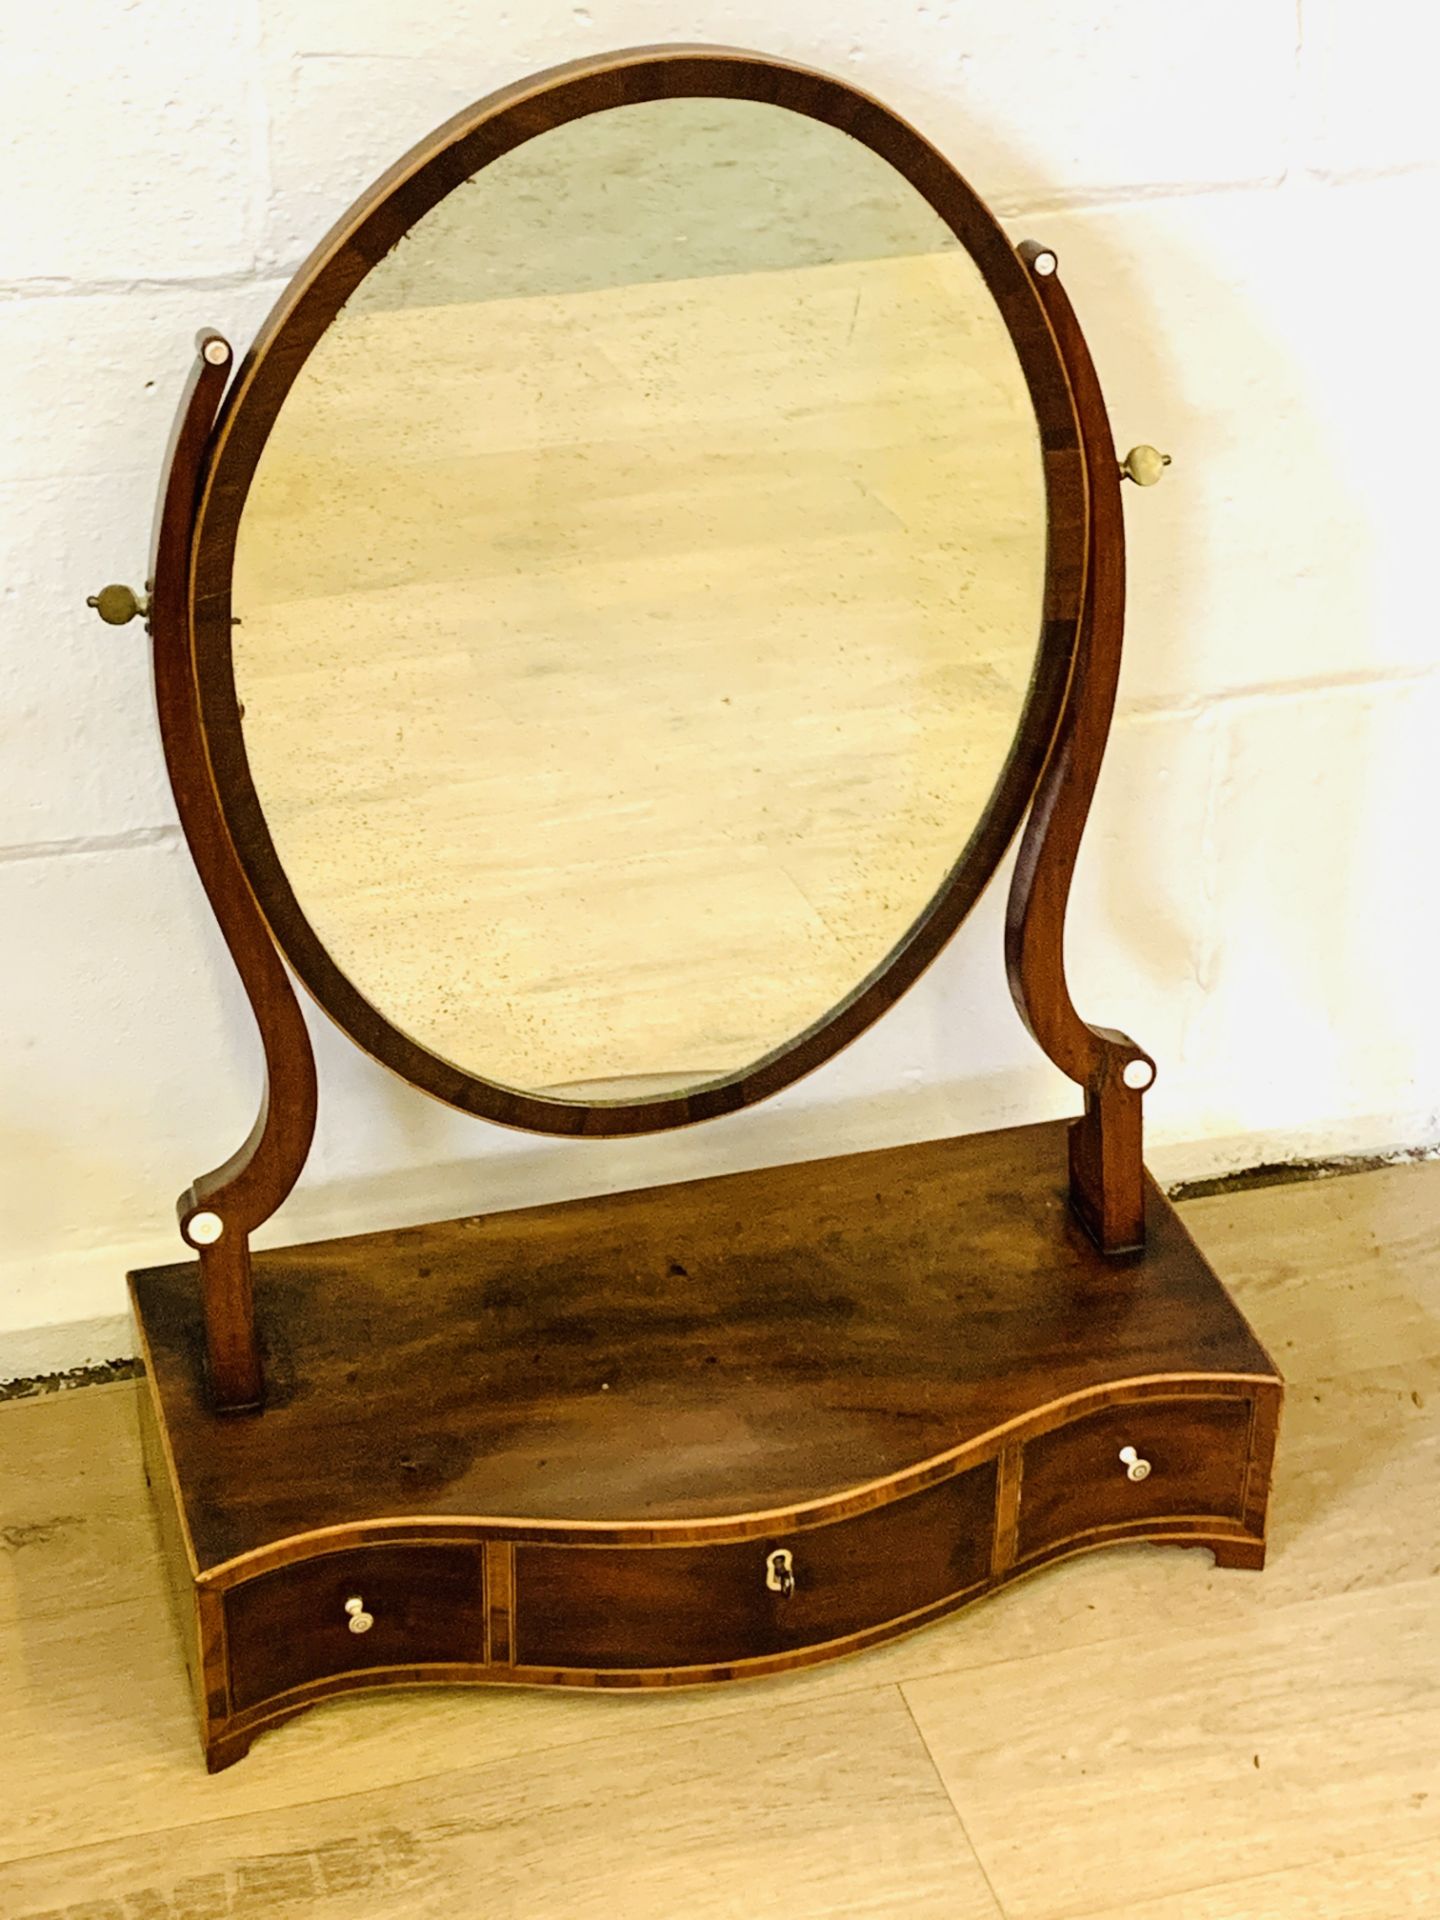 Mahogany veneer oval toilet mirror to three drawers - Image 2 of 4